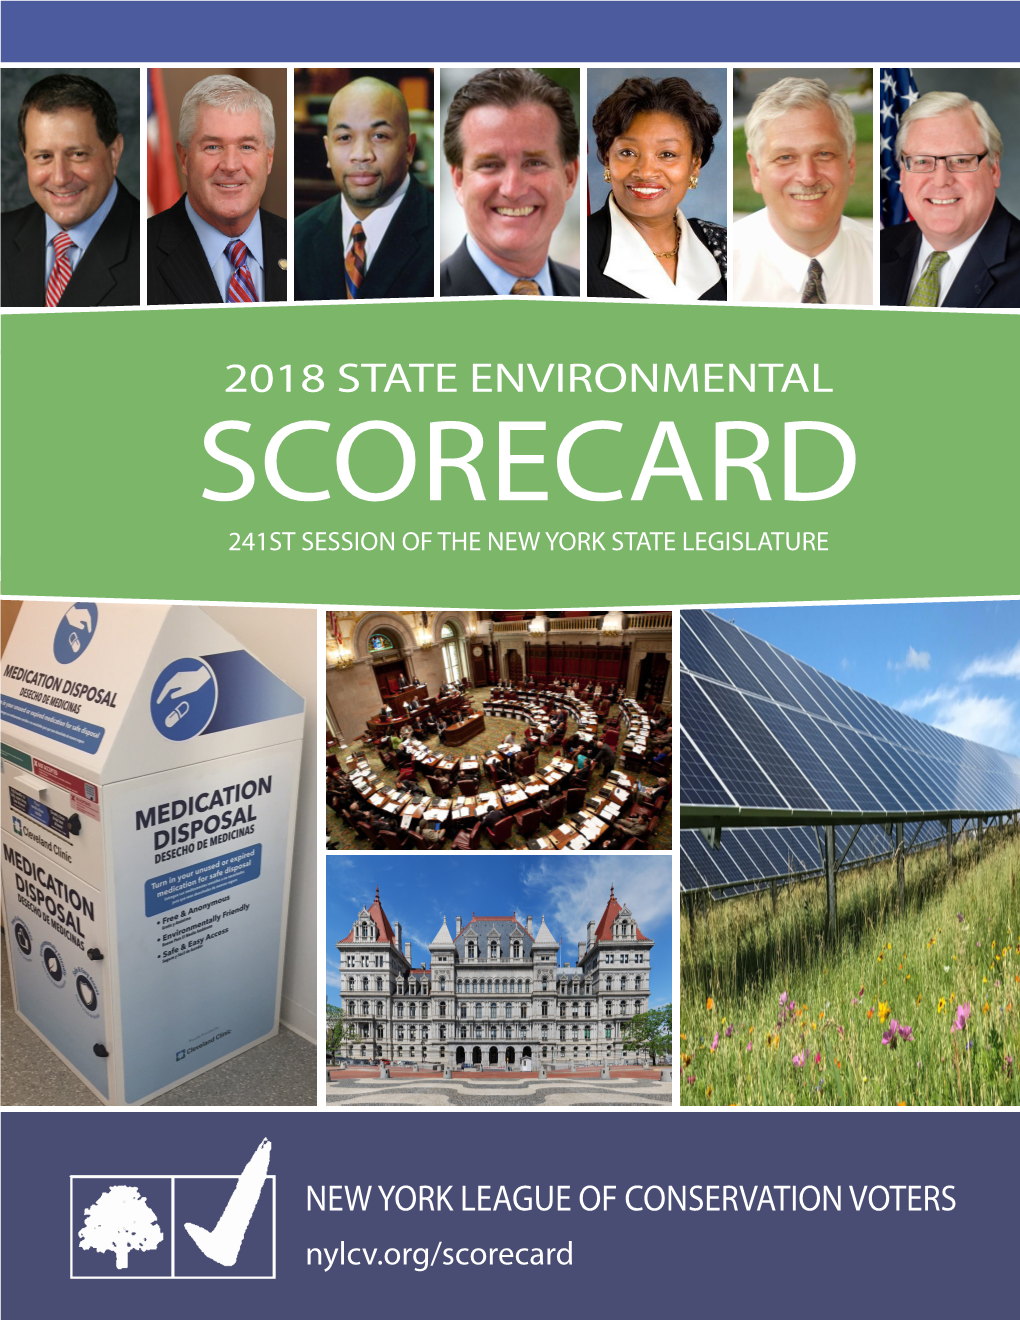 2018 State Environmental Scorecard 241St Session of the New York State Legislature